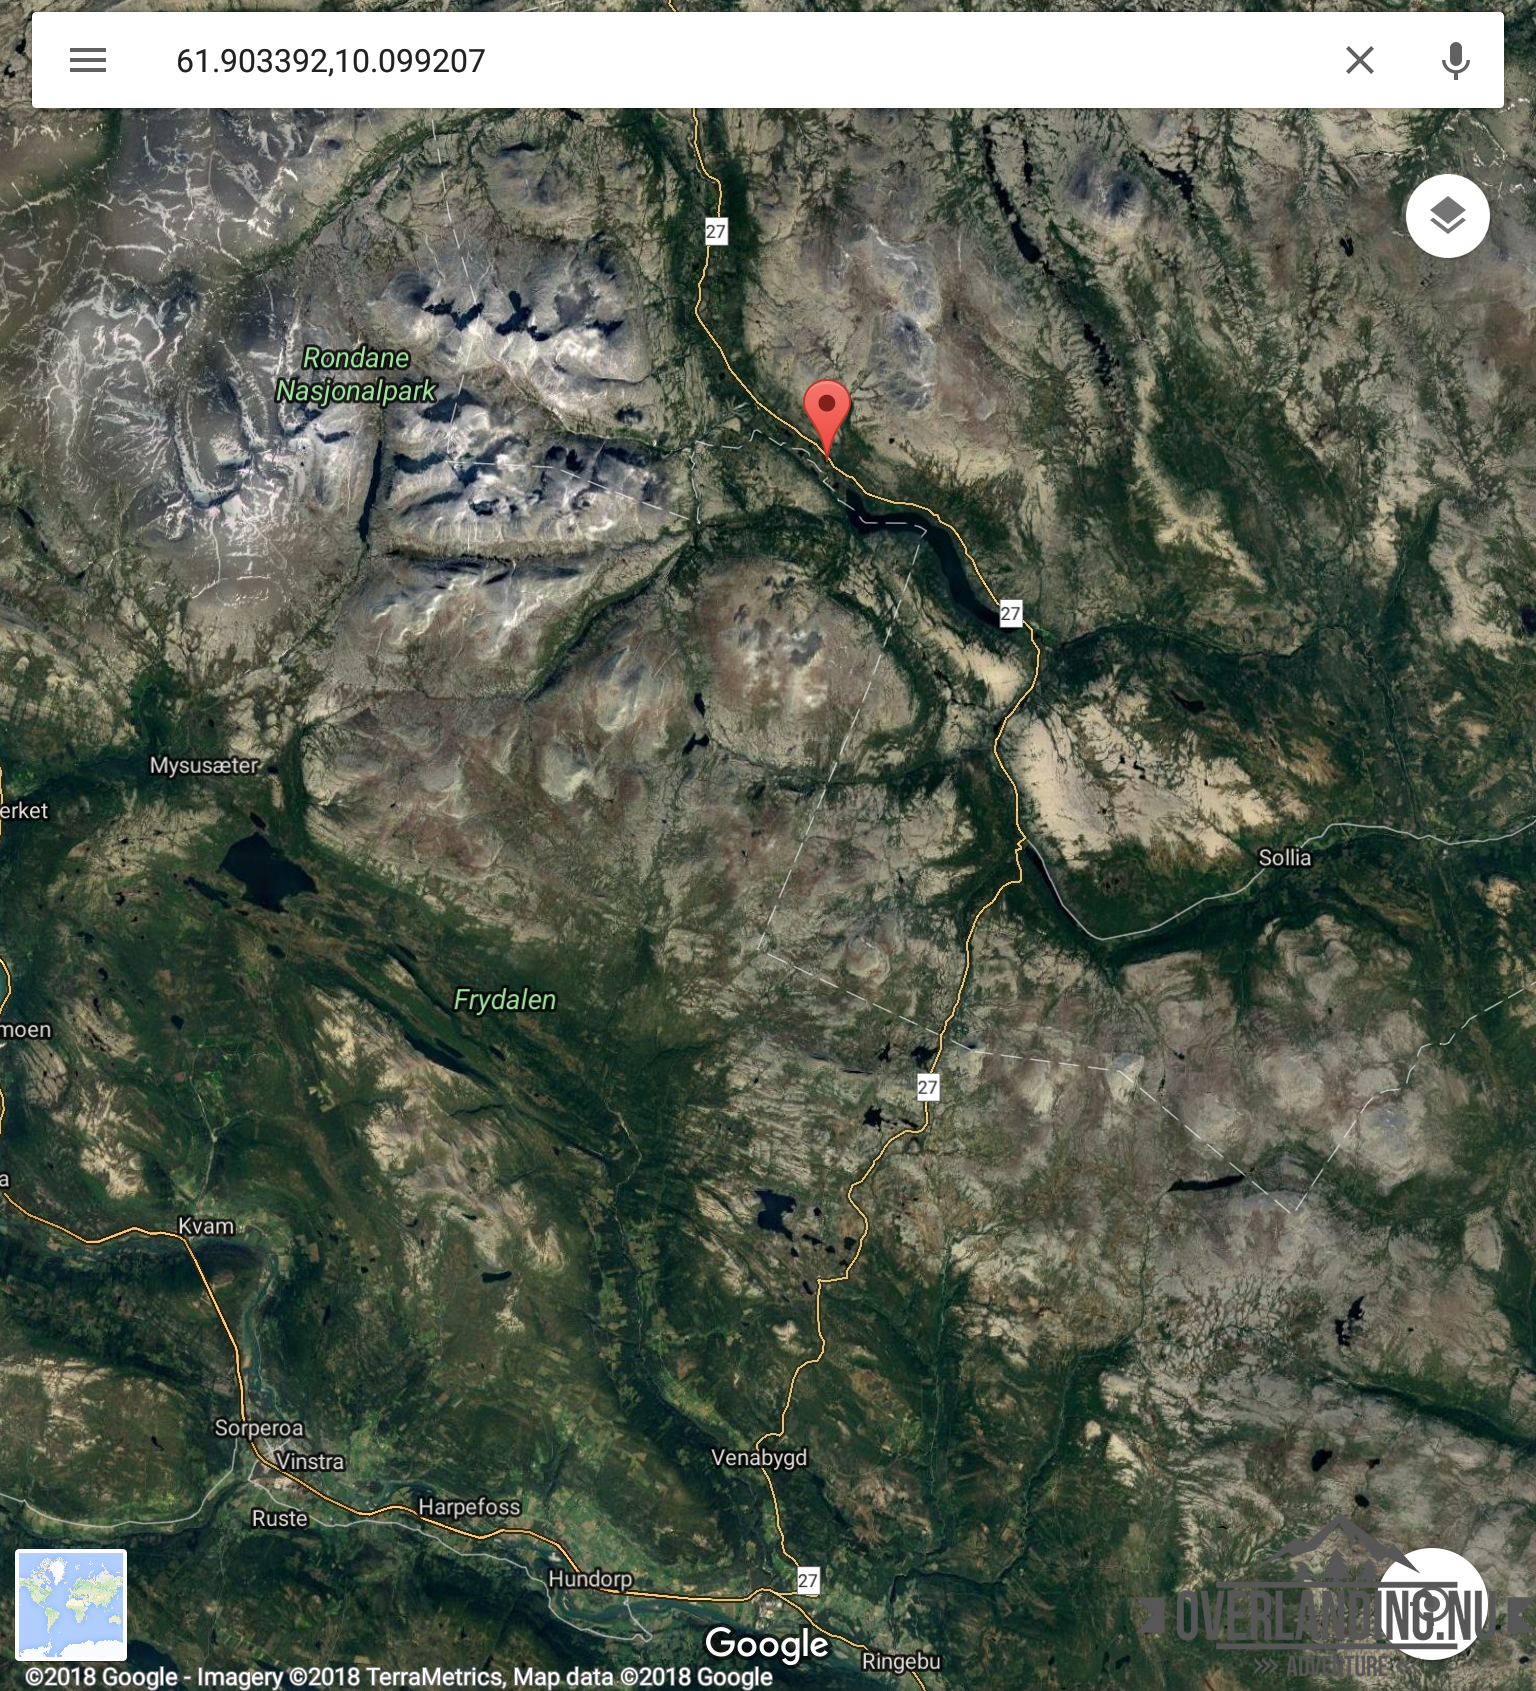 Camp Rondane Nationalpark